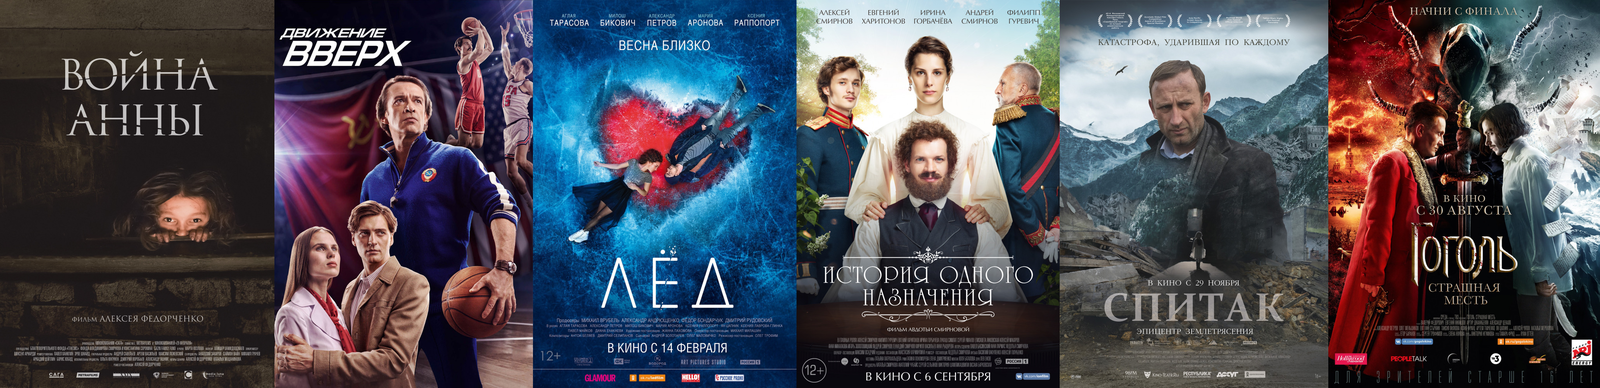 Winners of the Golden Eagle Award - Movies, Film Awards, , Russian cinema, Video, Longpost